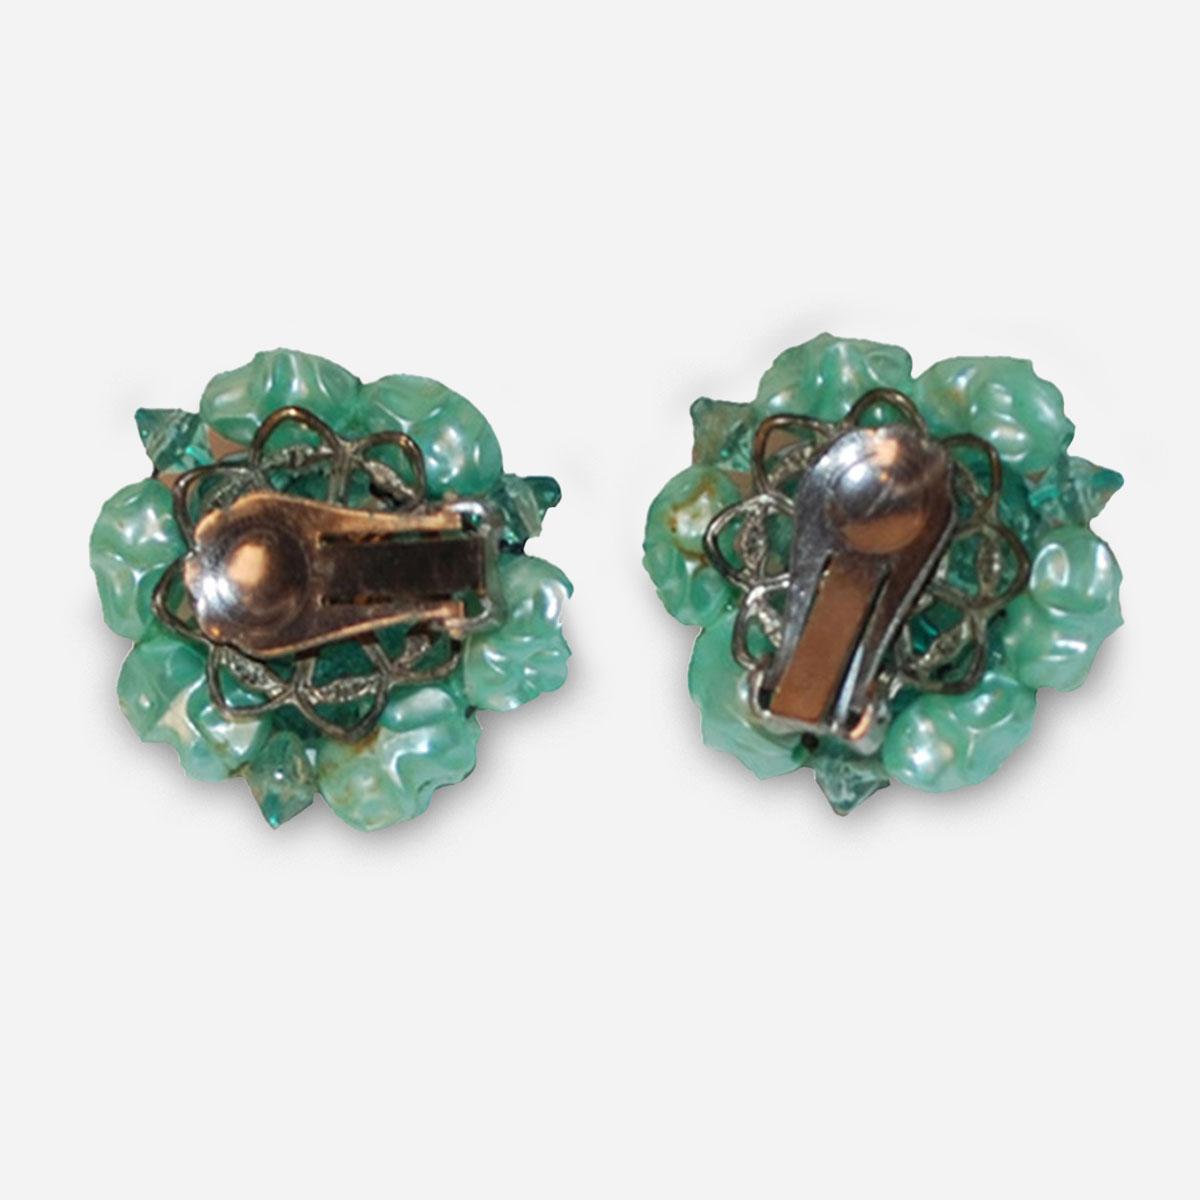 1950s cluster bead earrings